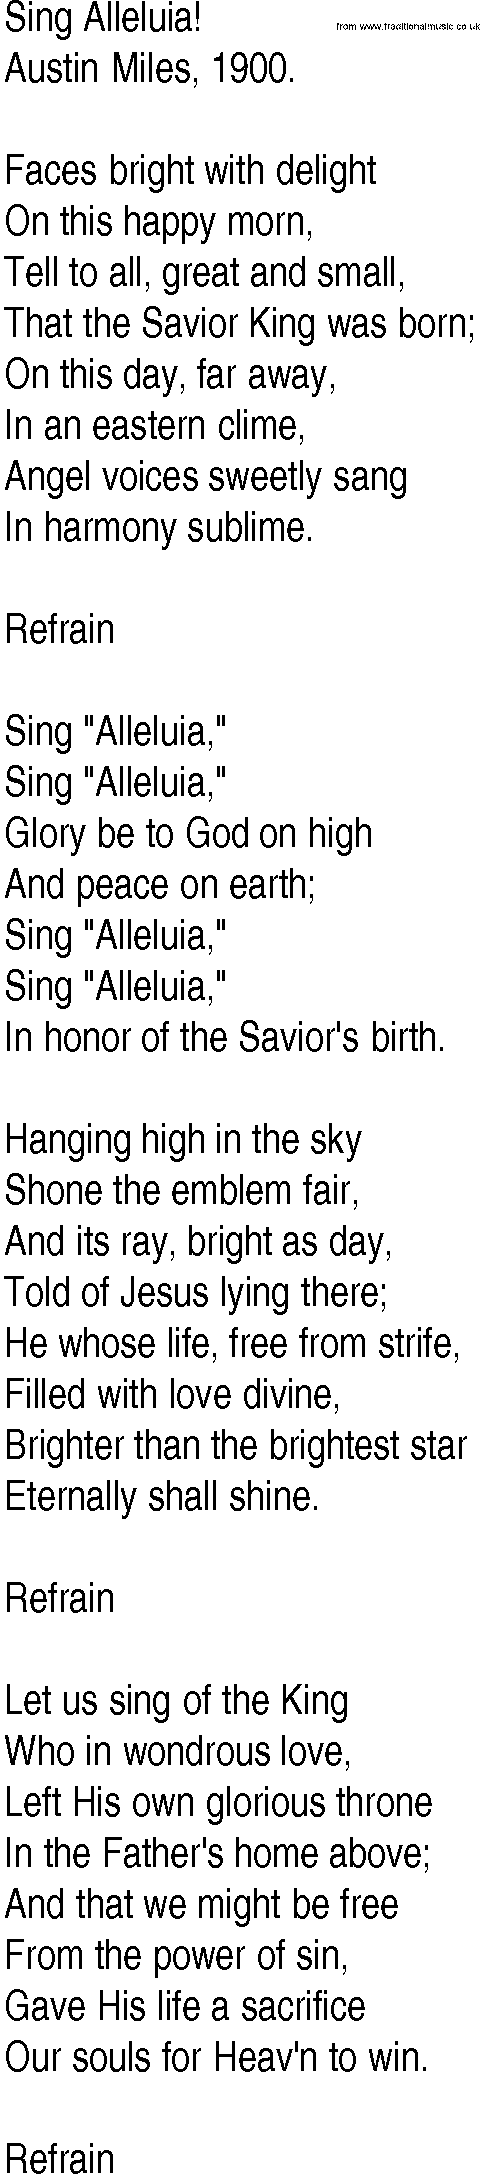 Hymn and Gospel Song: Sing Alleluia! by Austin Miles lyrics